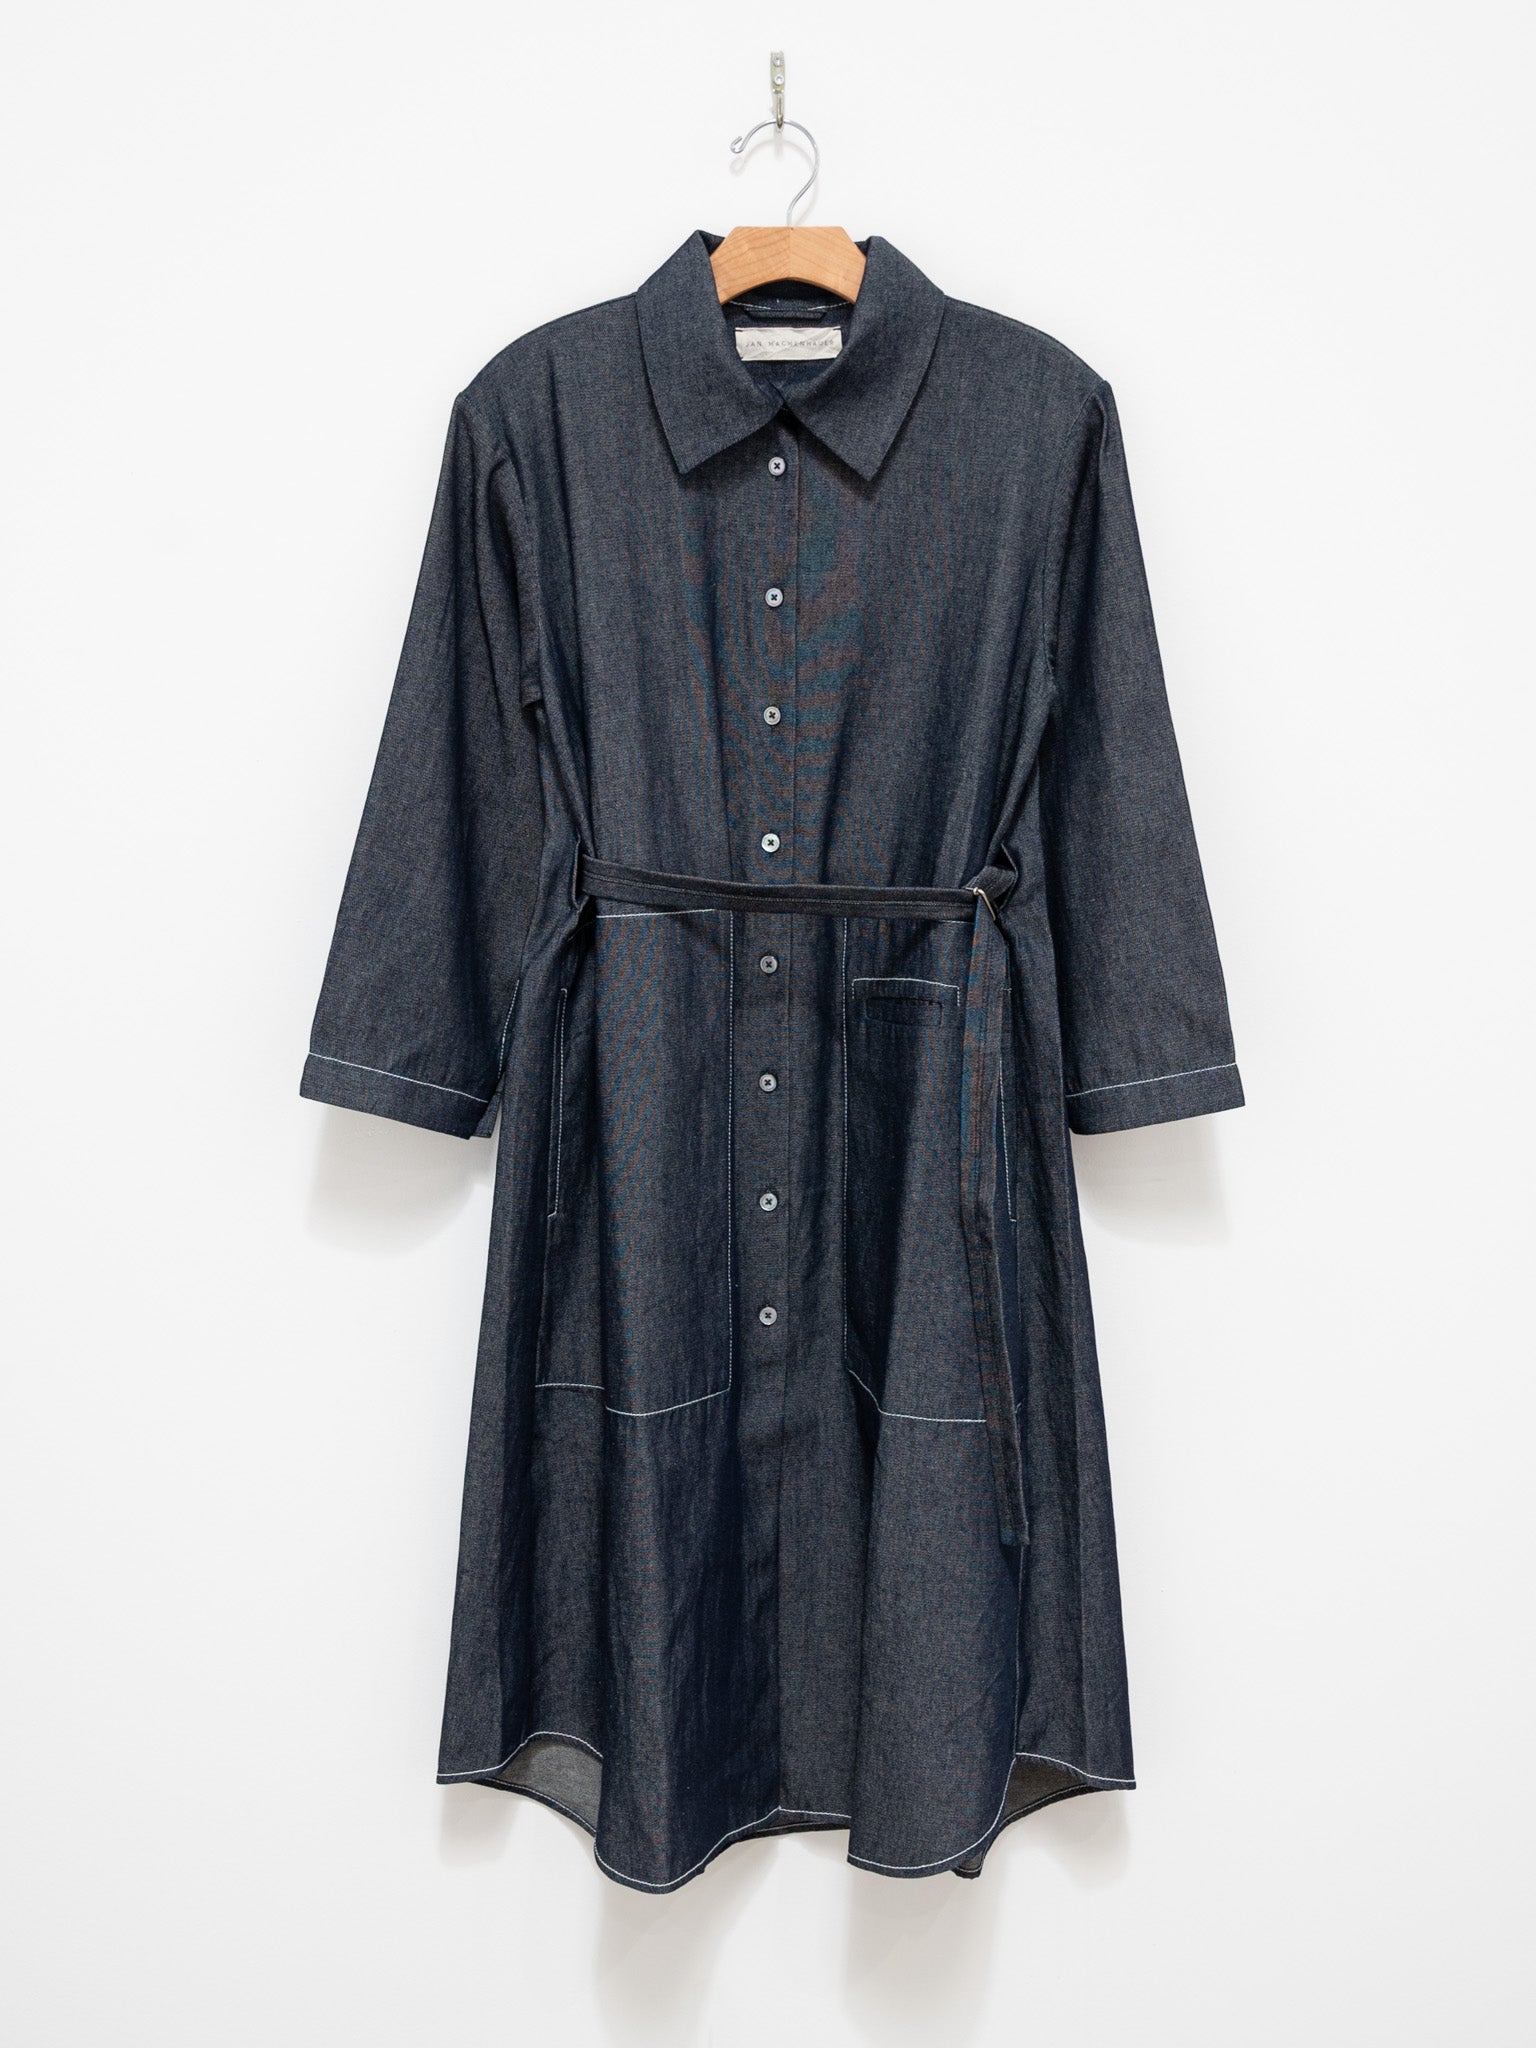 Namu Shop - Jan Machenhauer Giselle Shirt Dress - No.4 Denim